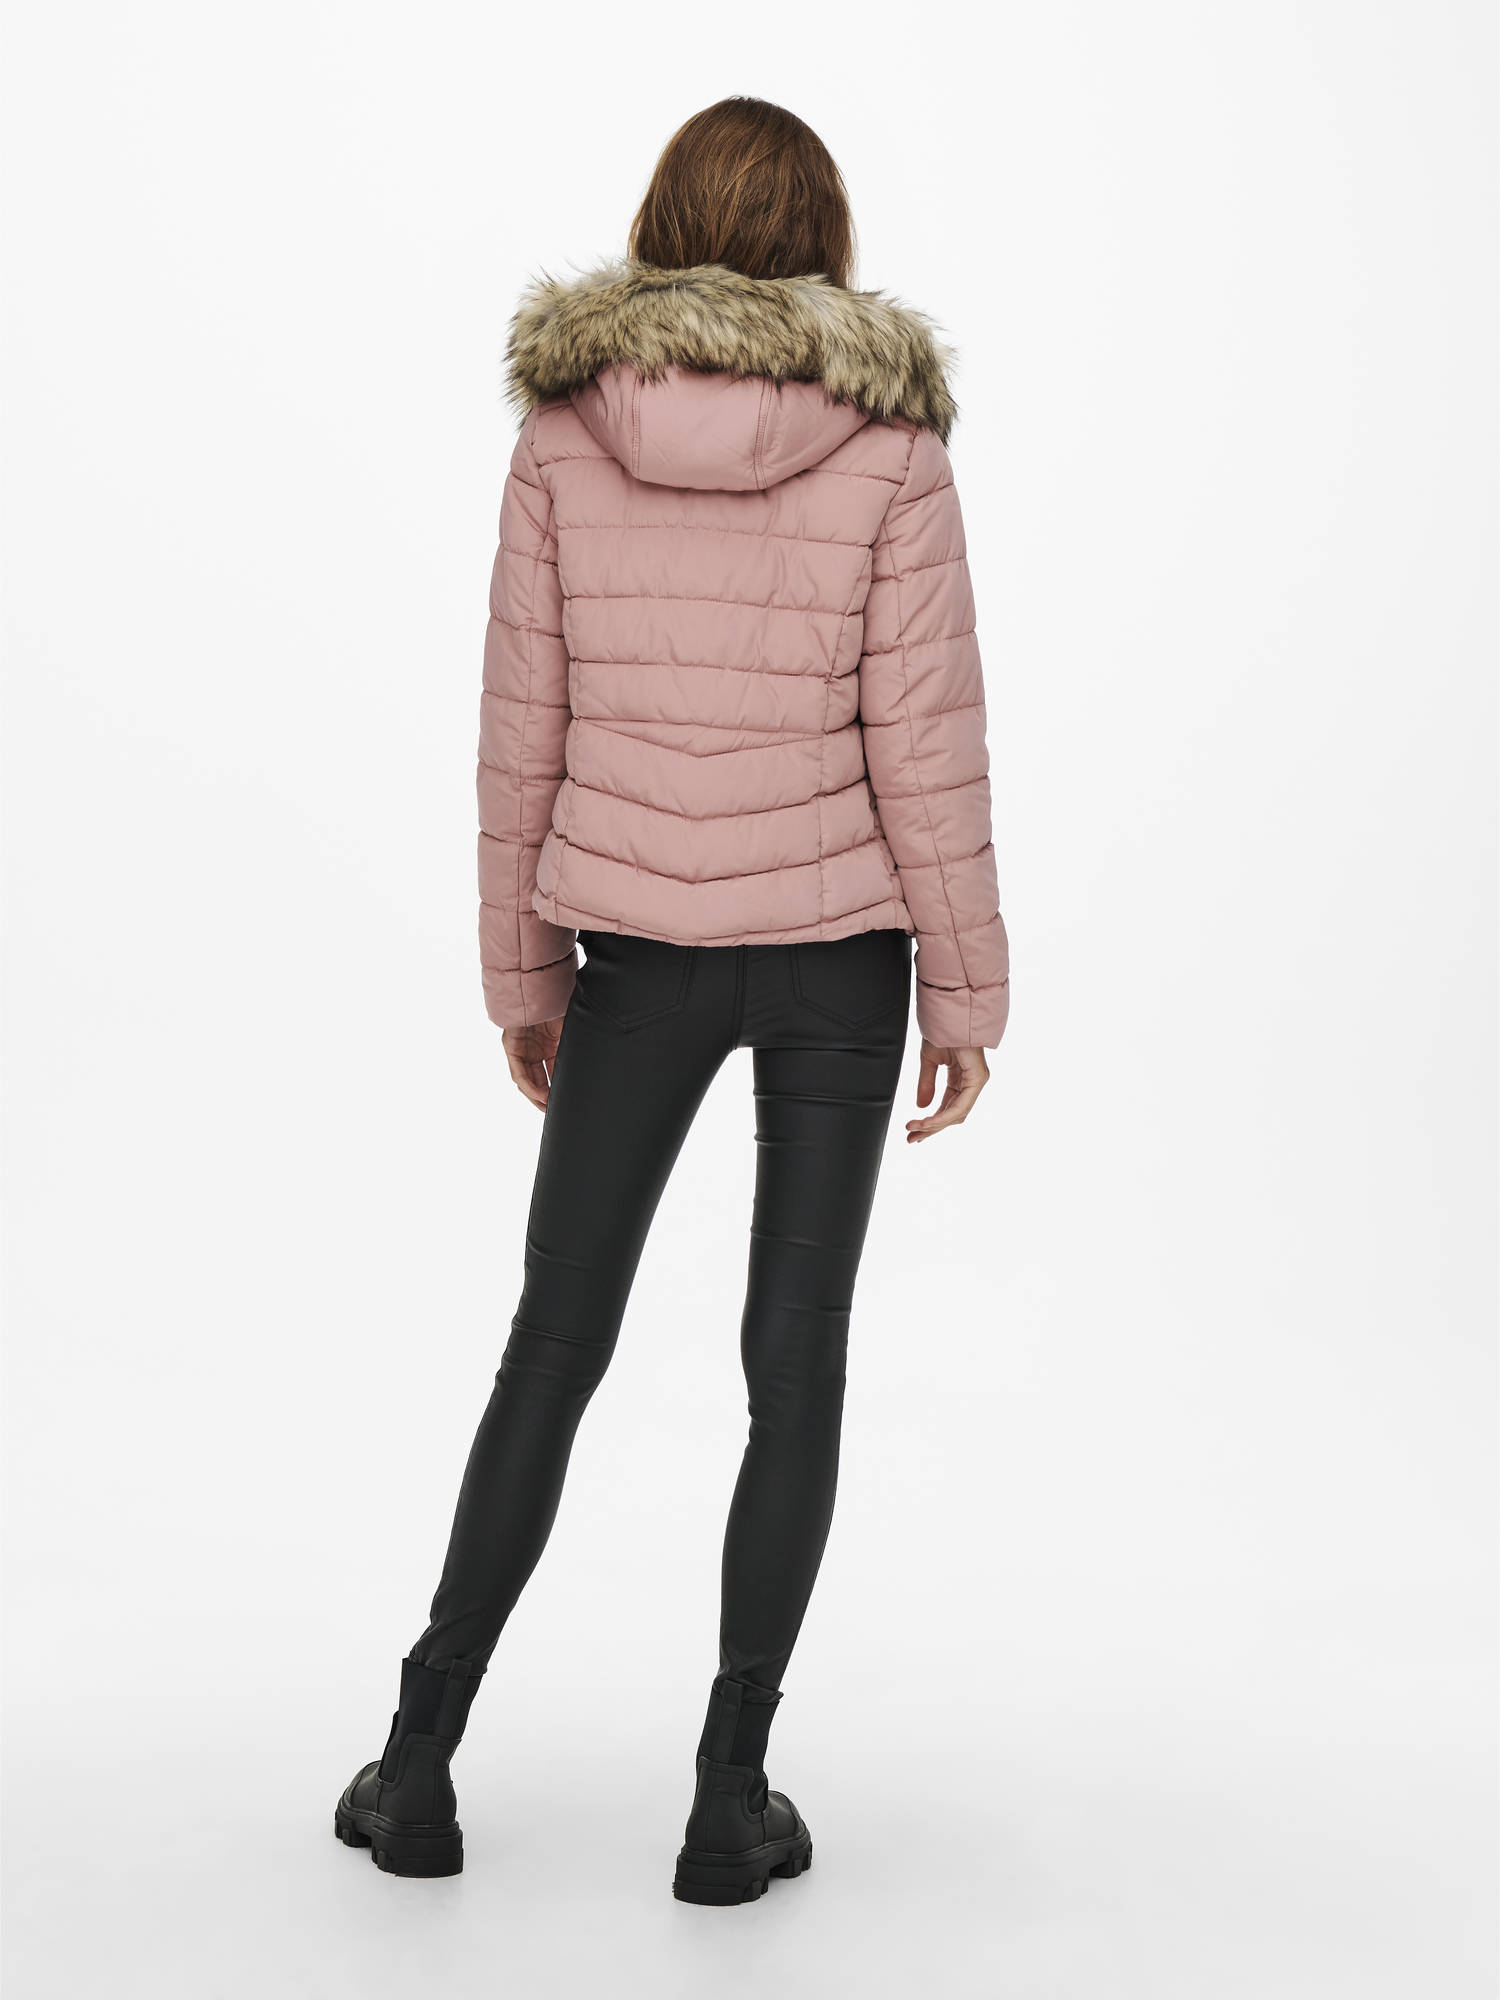 Only Winter Jacket New ellan ash rose - Stilettoshop.eu webstore